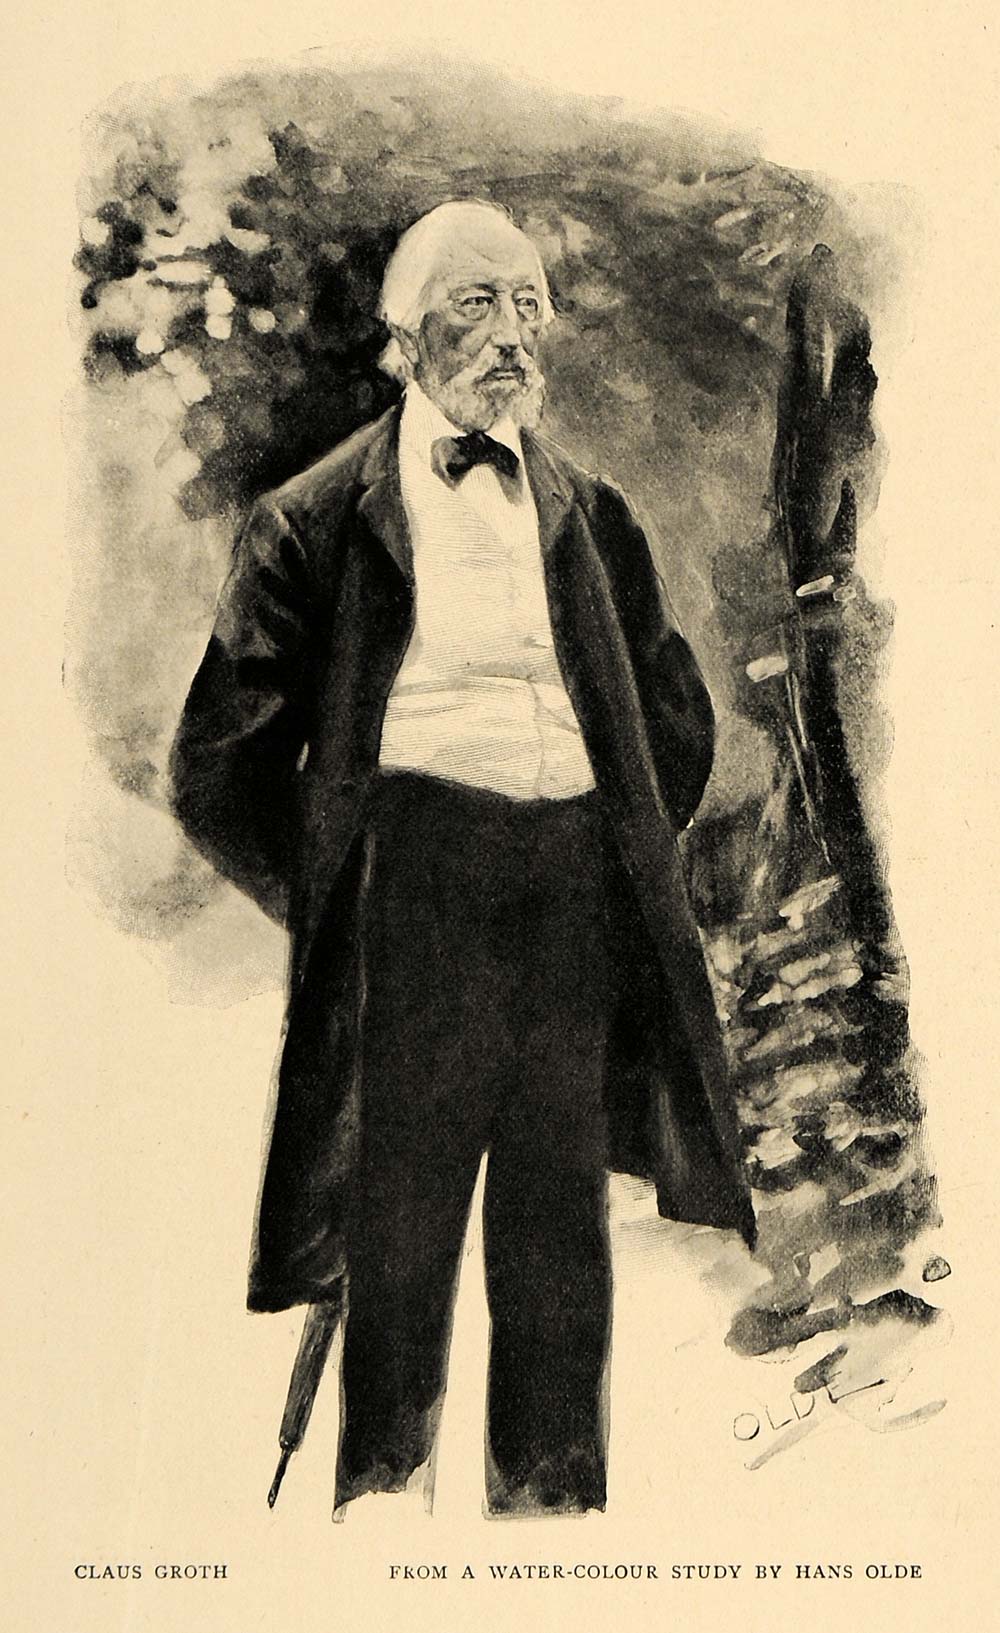 1900 Print Artist Hans Olde "Claus Groth" Watercolor - ORIGINAL HISTORIC INS2